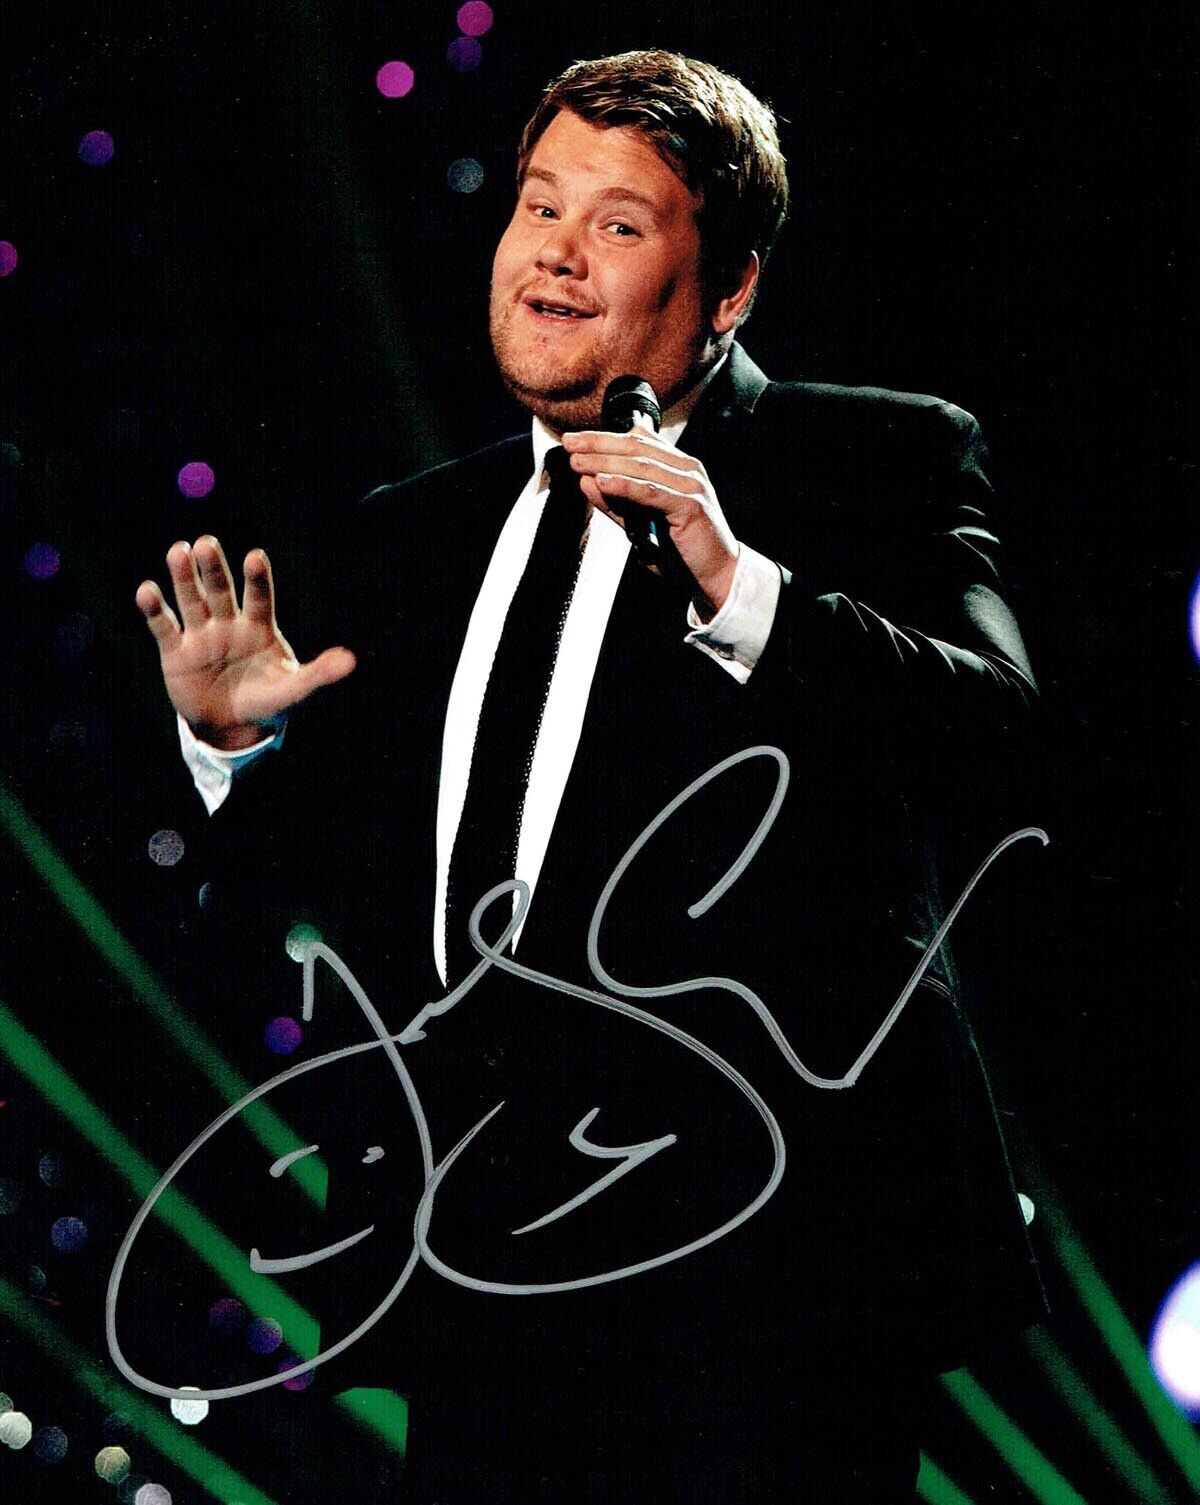 James Corden SIGNED Autograph 10x8 Photo Poster painting AFTAL COA TV Chat Show Host